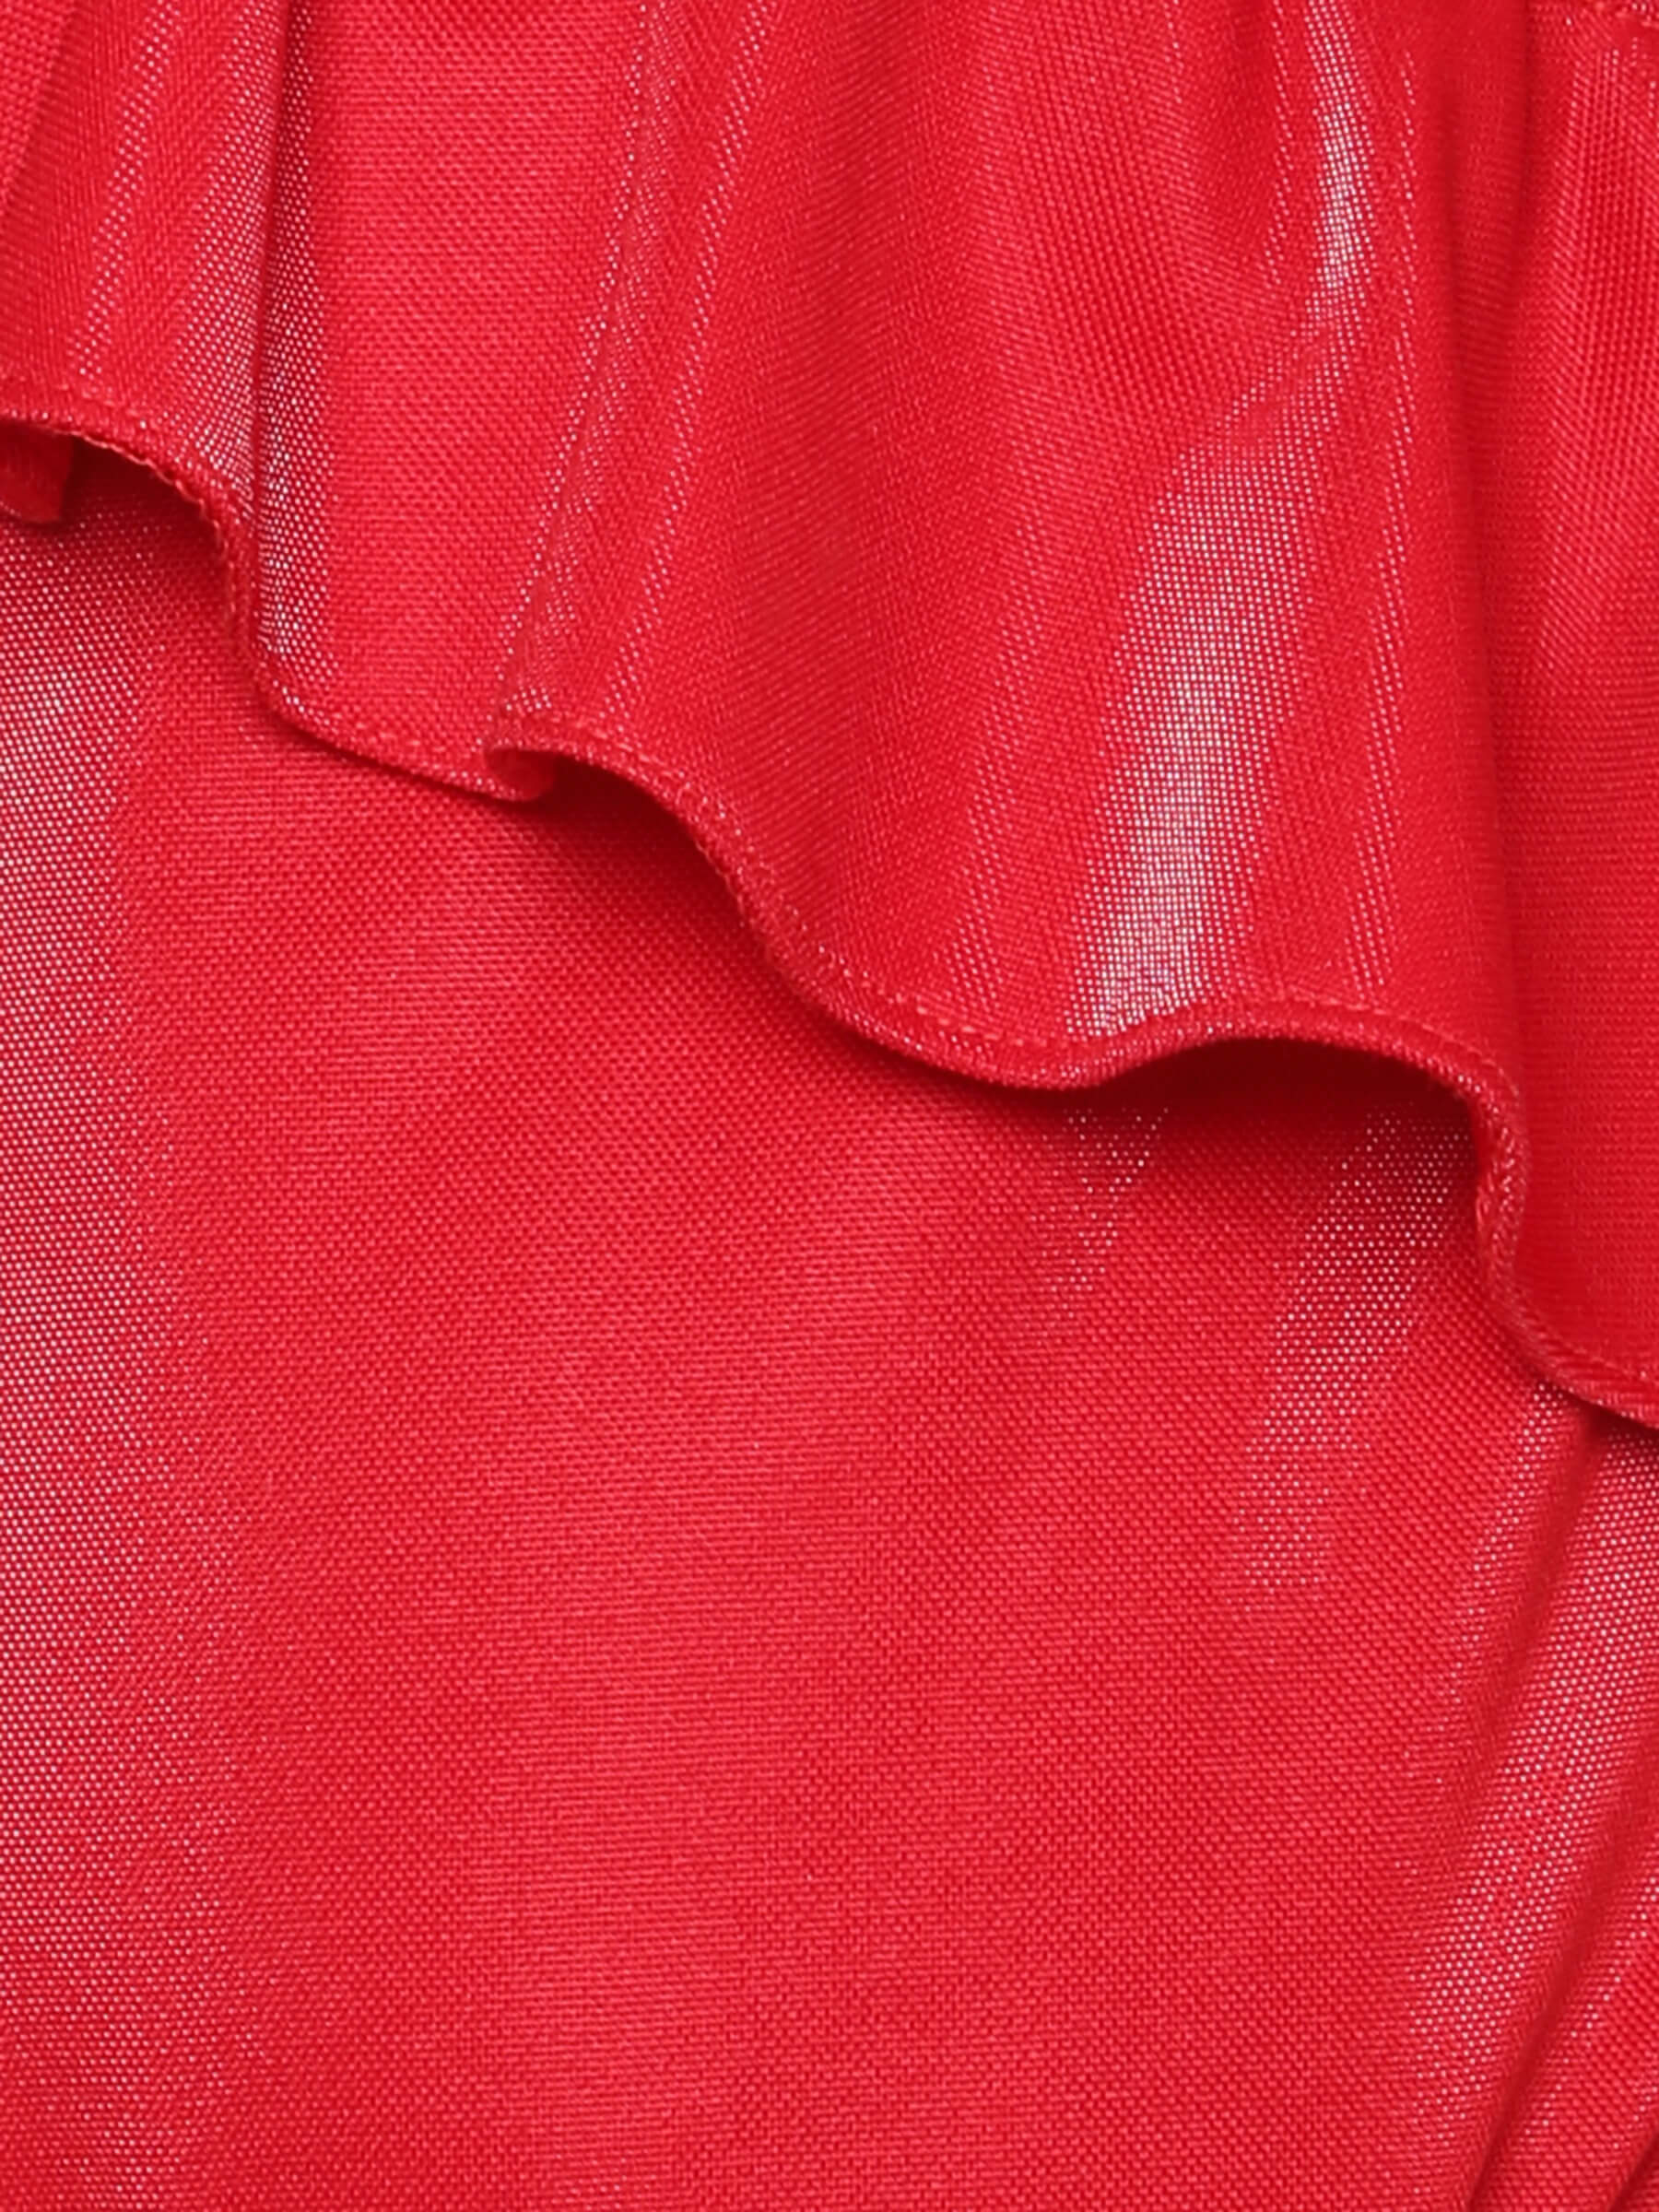 Taffykids One shoulder ruffle detail Aline party dress-Red